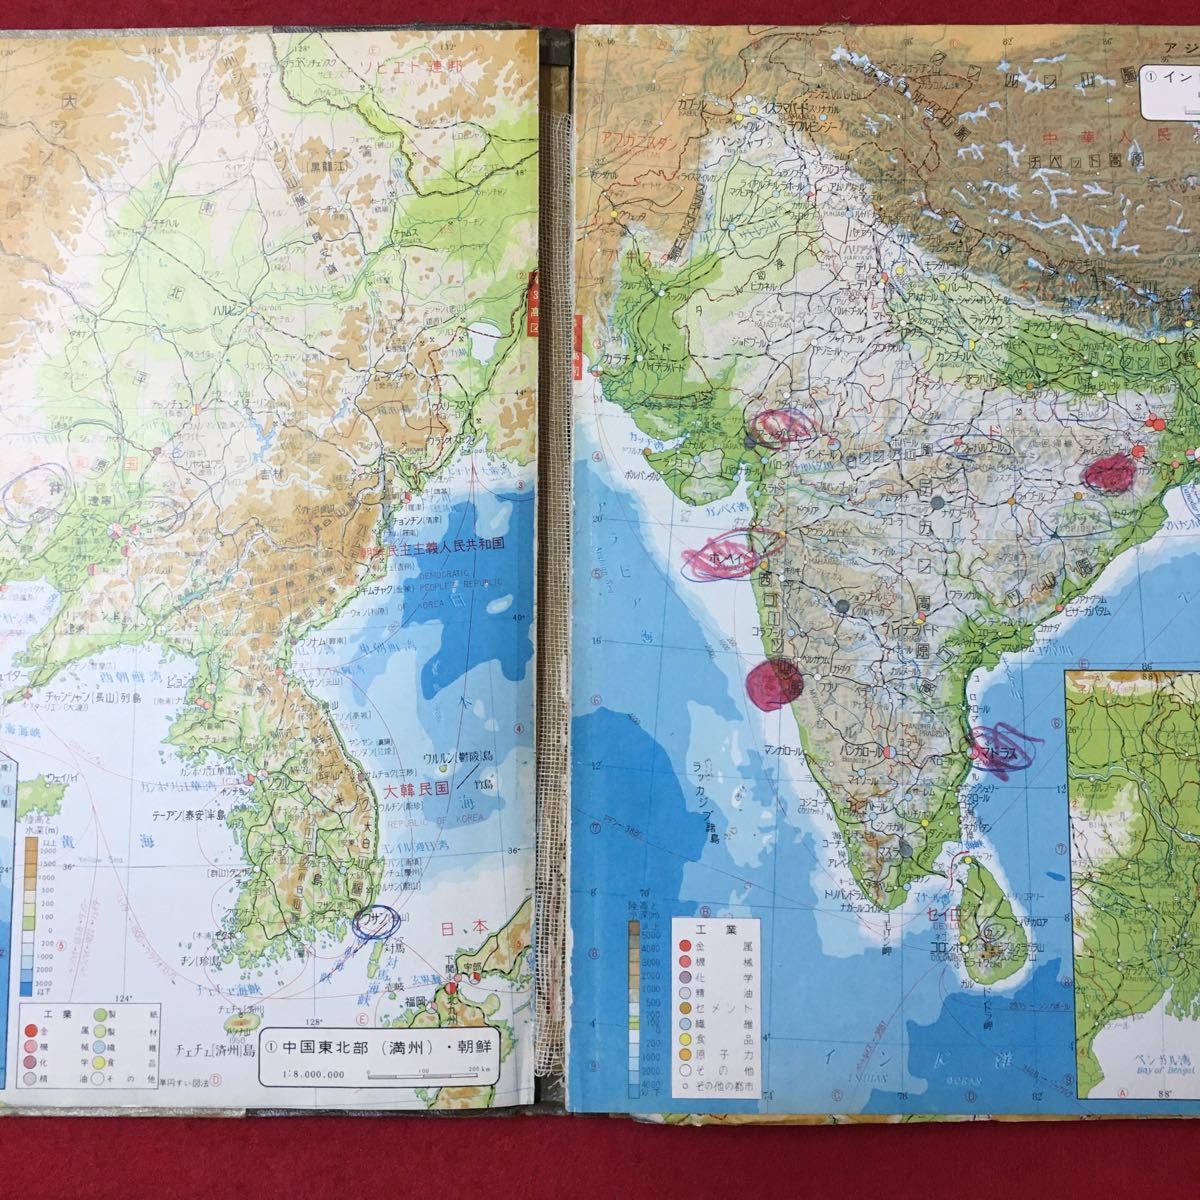 M6h-158 帝国書院編集部編 新詳高等地図 初訂版 昭和43年3月25日発行 著作者 帝国書院編集部 全体的に書き込み.劣化あり 地図の見方など_割れあり